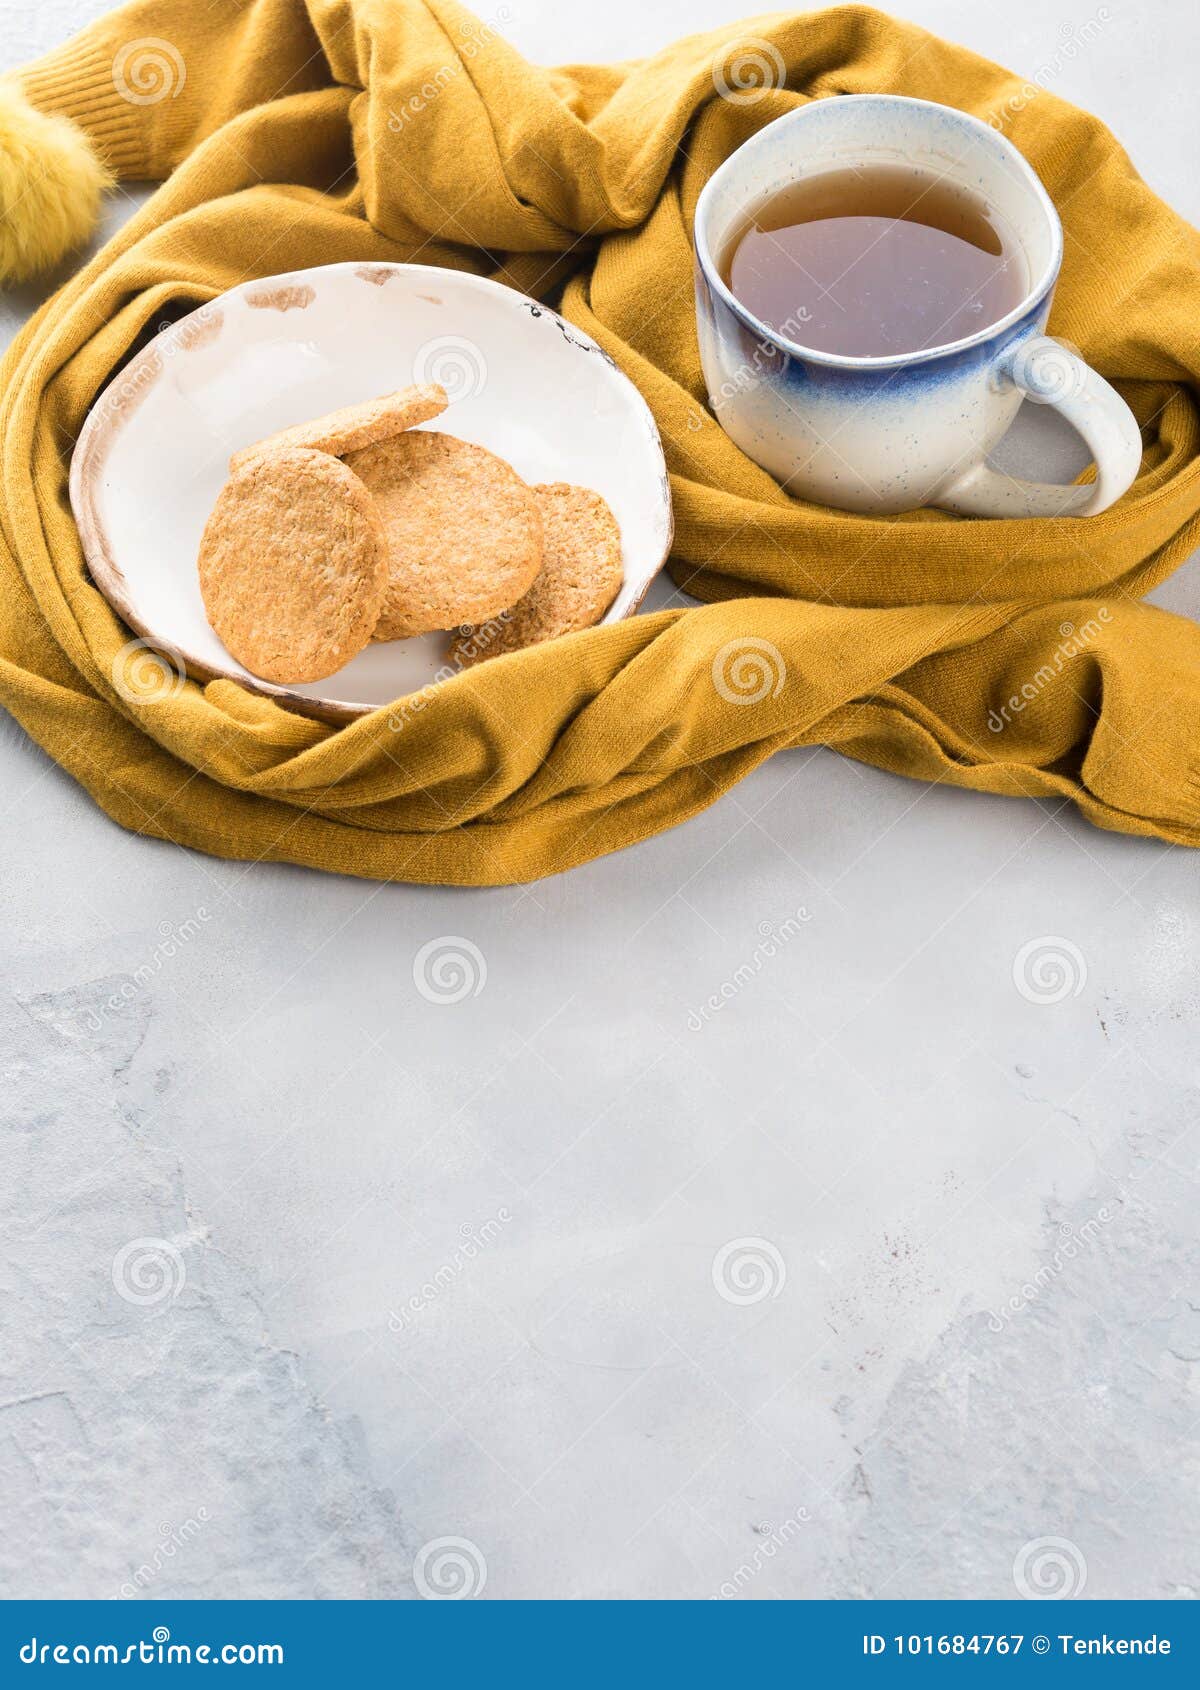 https://thumbs.dreamstime.com/z/winter-comfort-food-concept-woman-s-scarf-mug-tea-cookies-moment-relax-winter-comfort-food-concept-tea-101684767.jpg